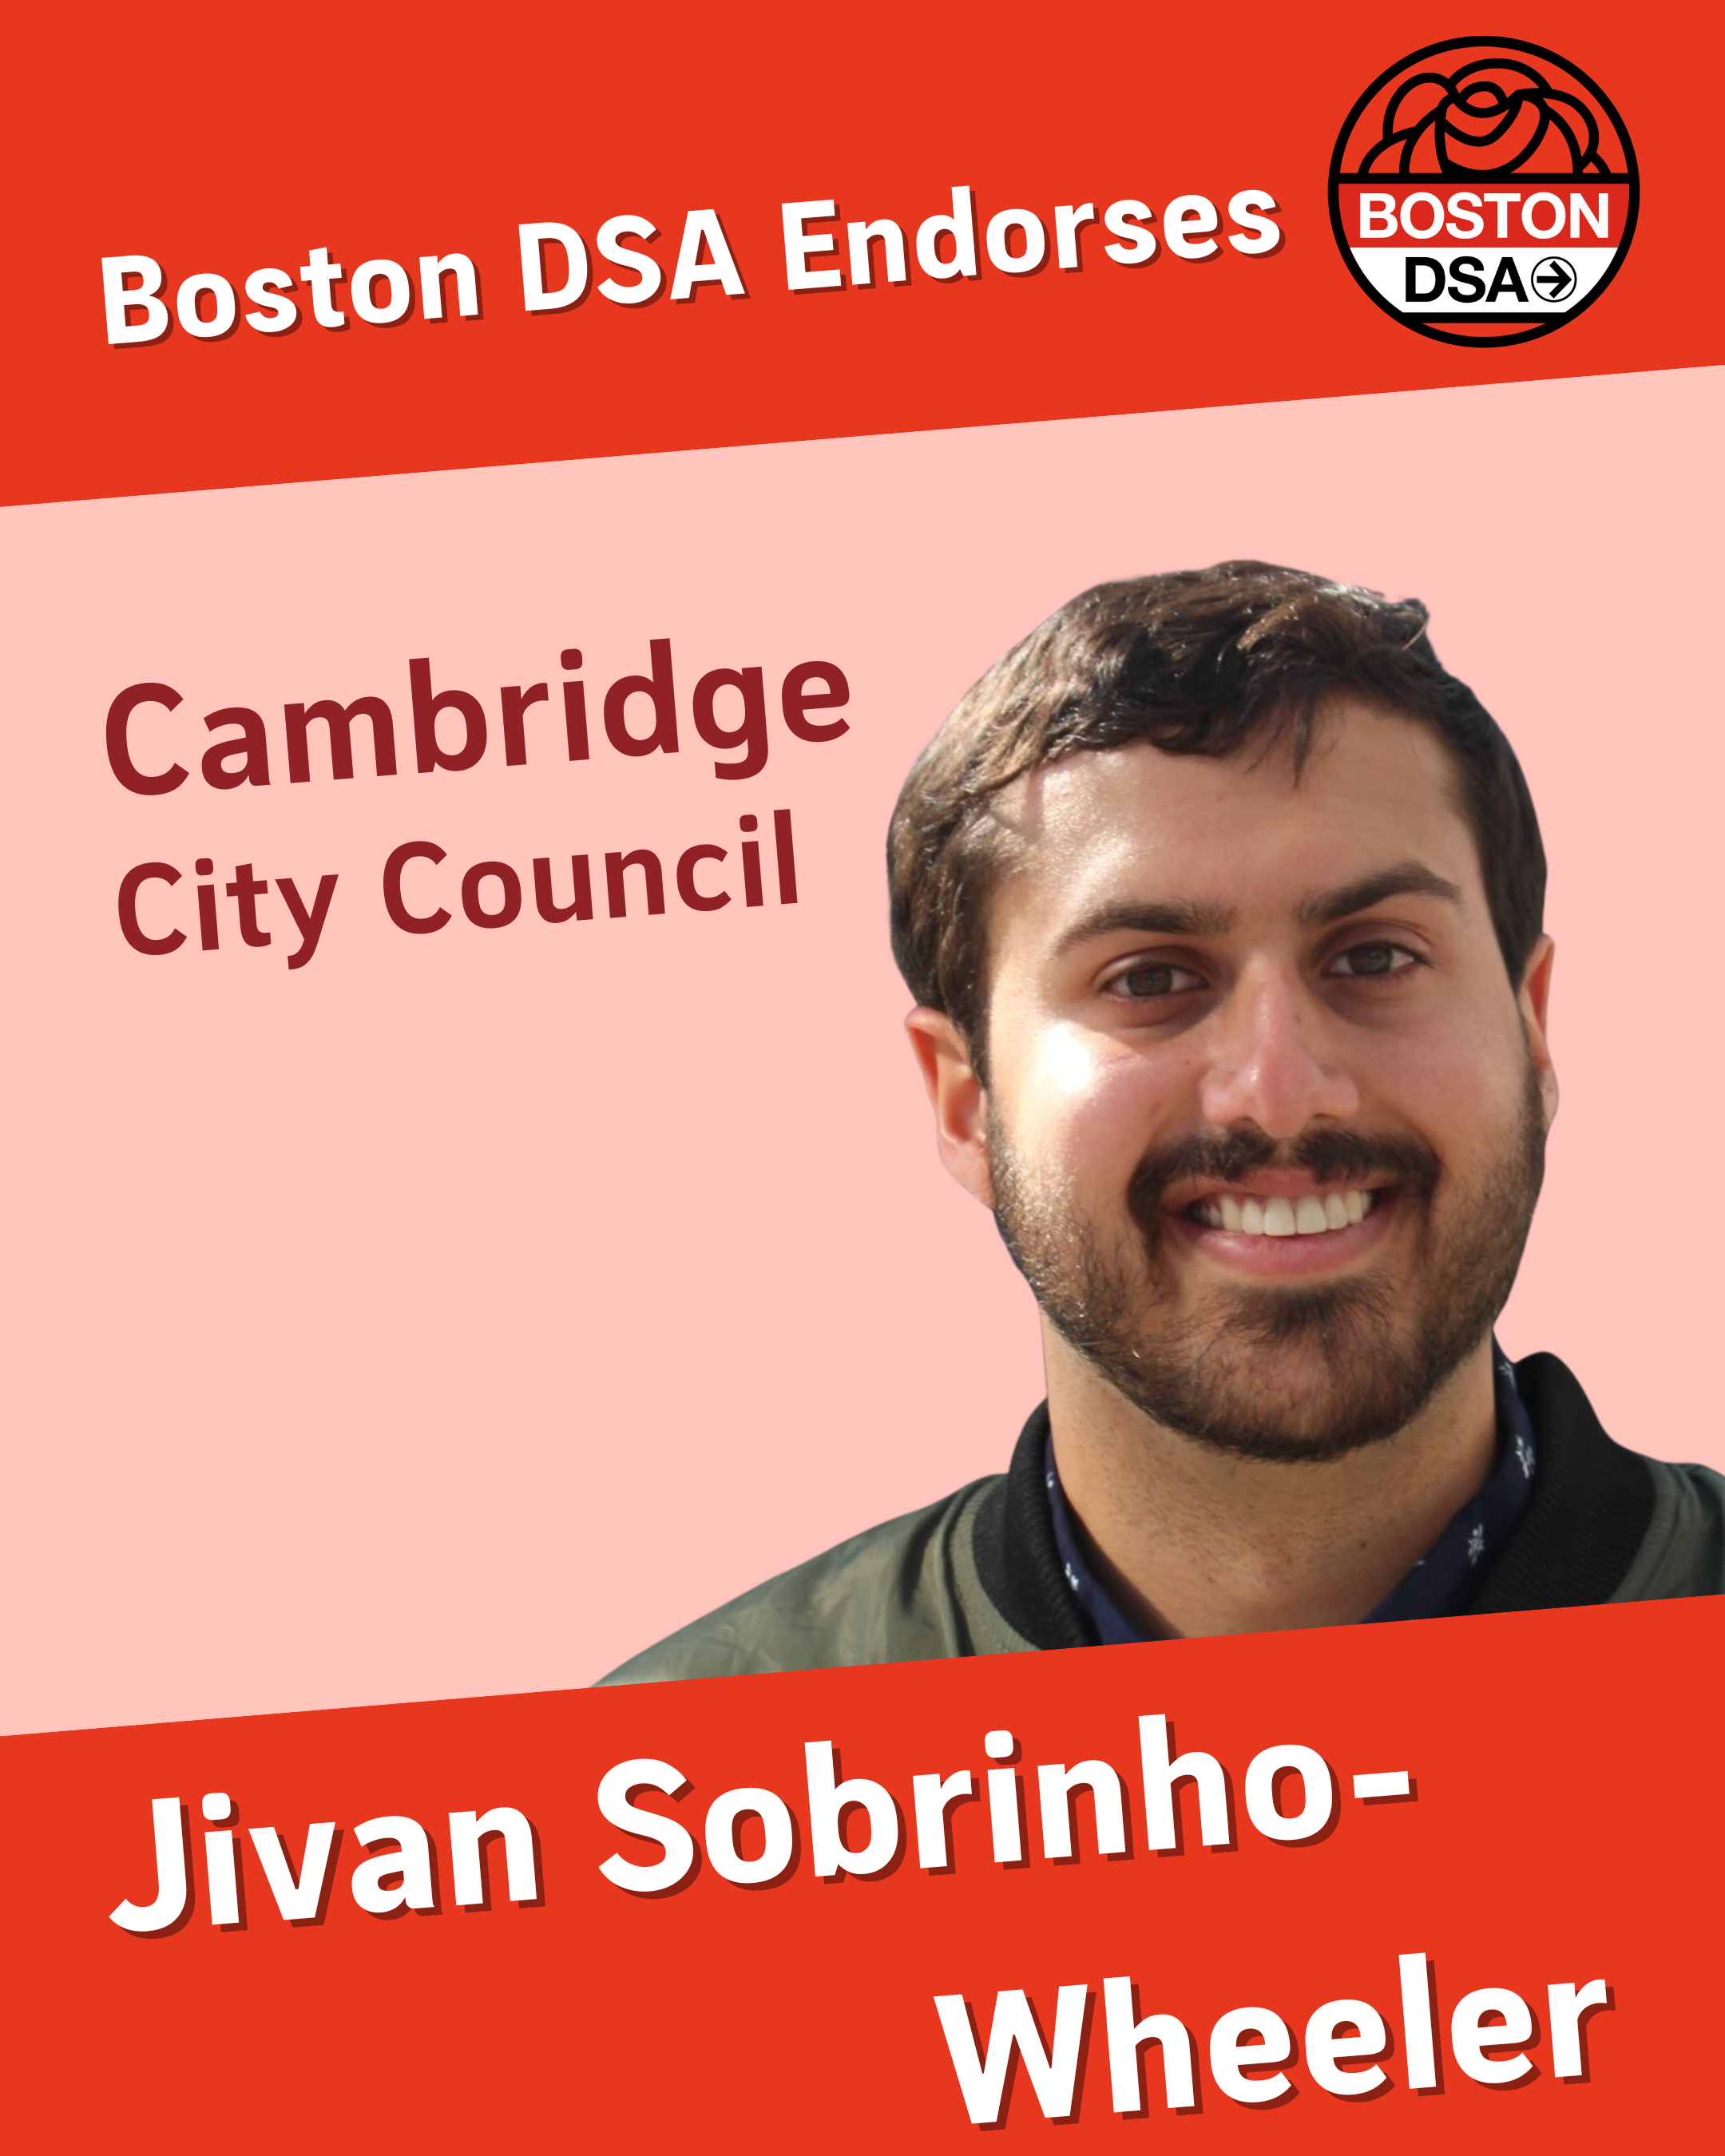 Boston DSA Endorses Cambridge City Council - Jivan Sobrinho-Wheeler